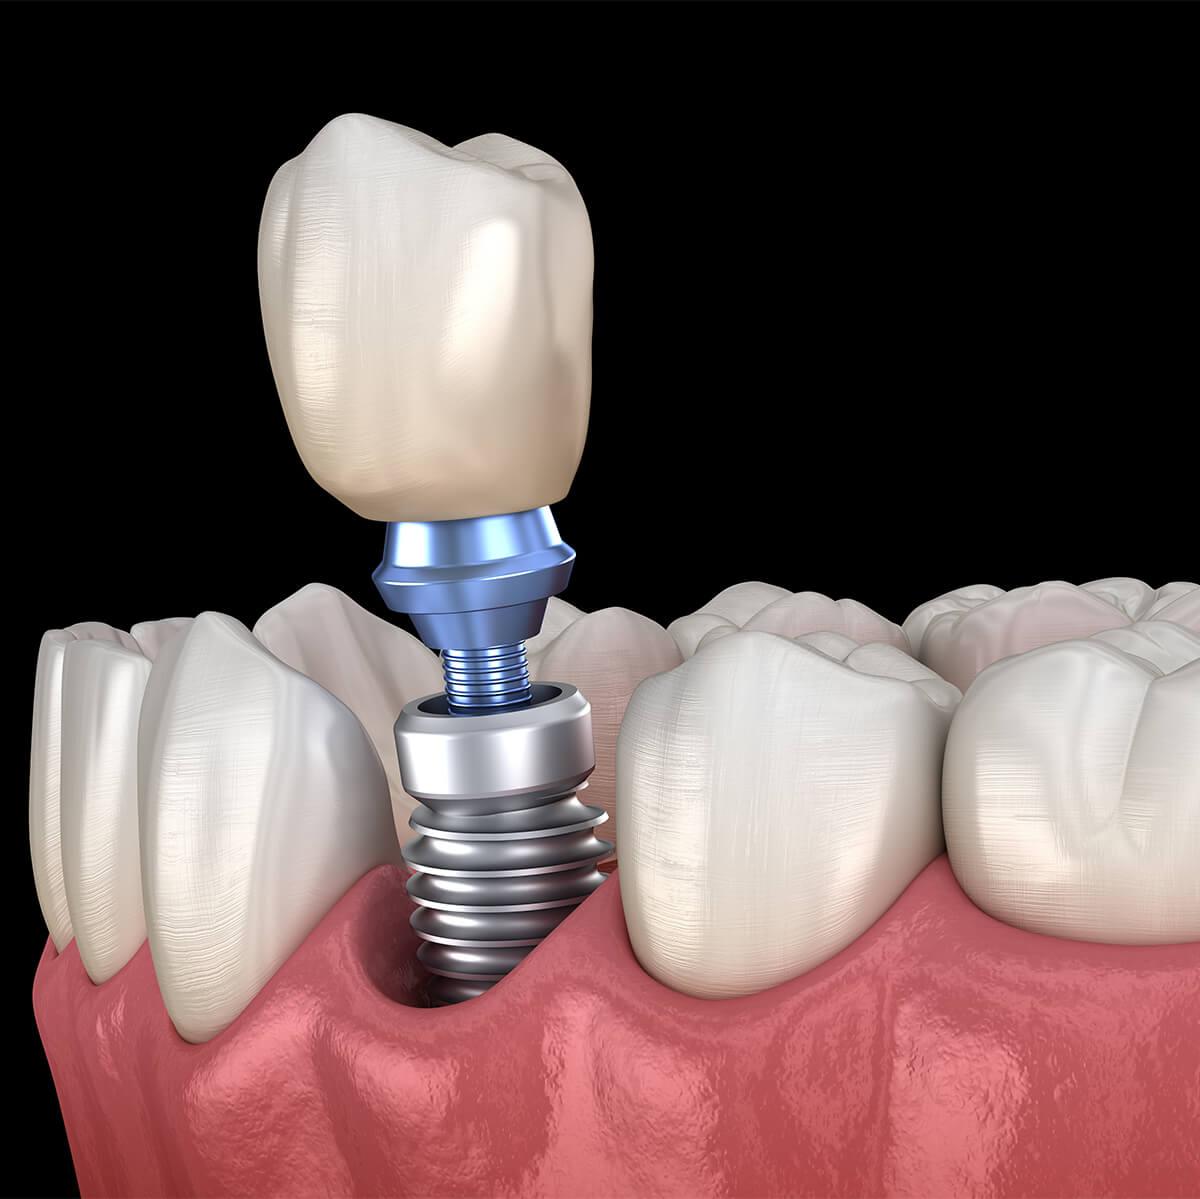 Tooth Implant Procedure in Lauderdale FL Area